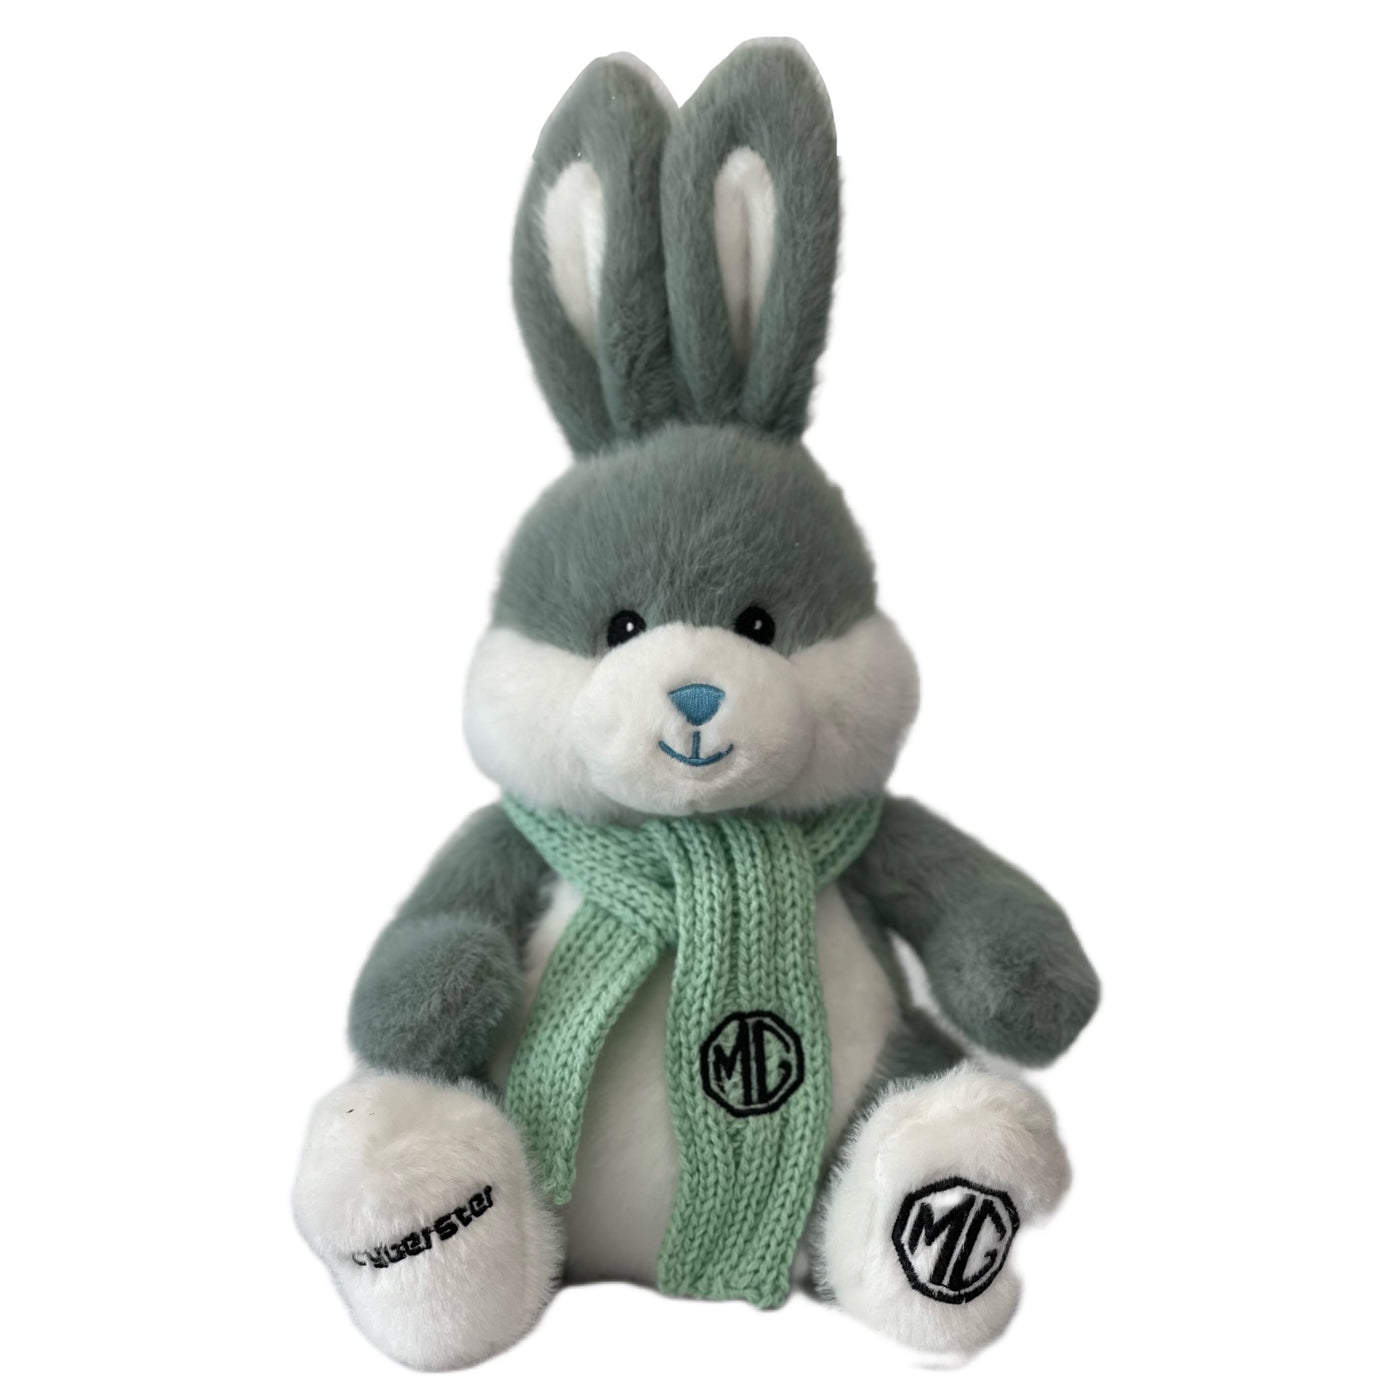 Rabbit MG Cyberster/Green